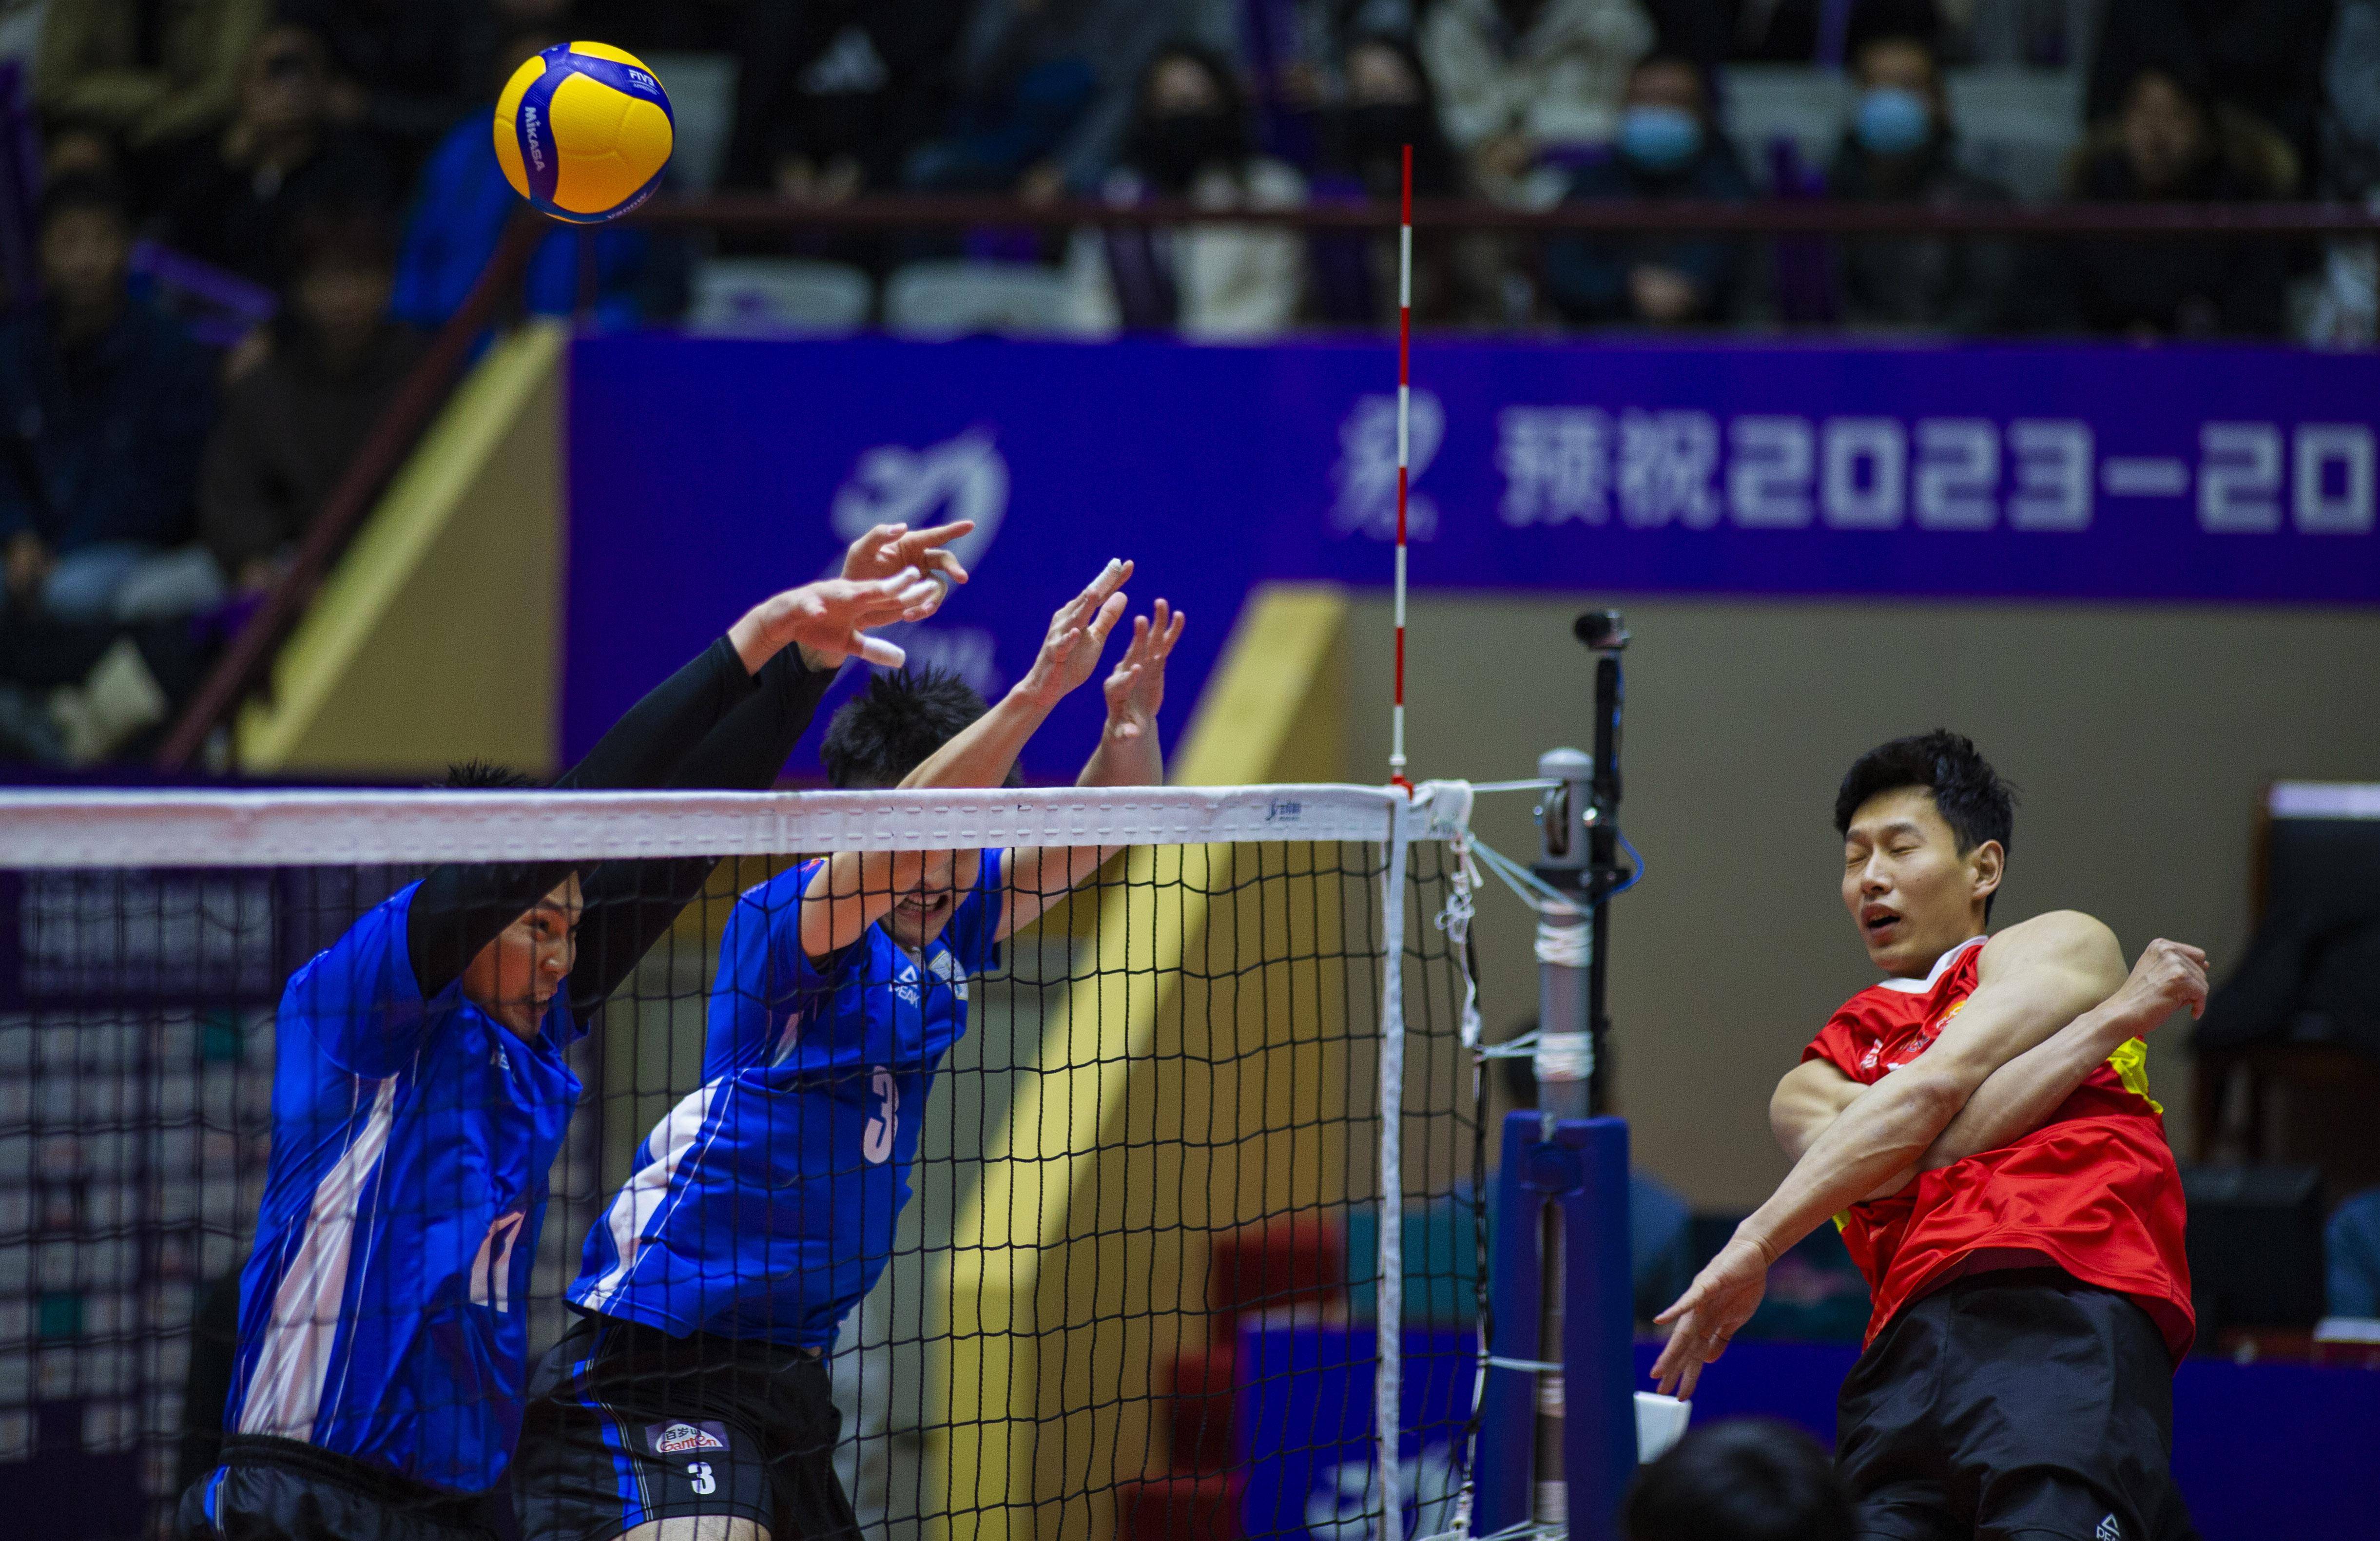 【168sports】中国男子排球超级联赛开封赛区开赛